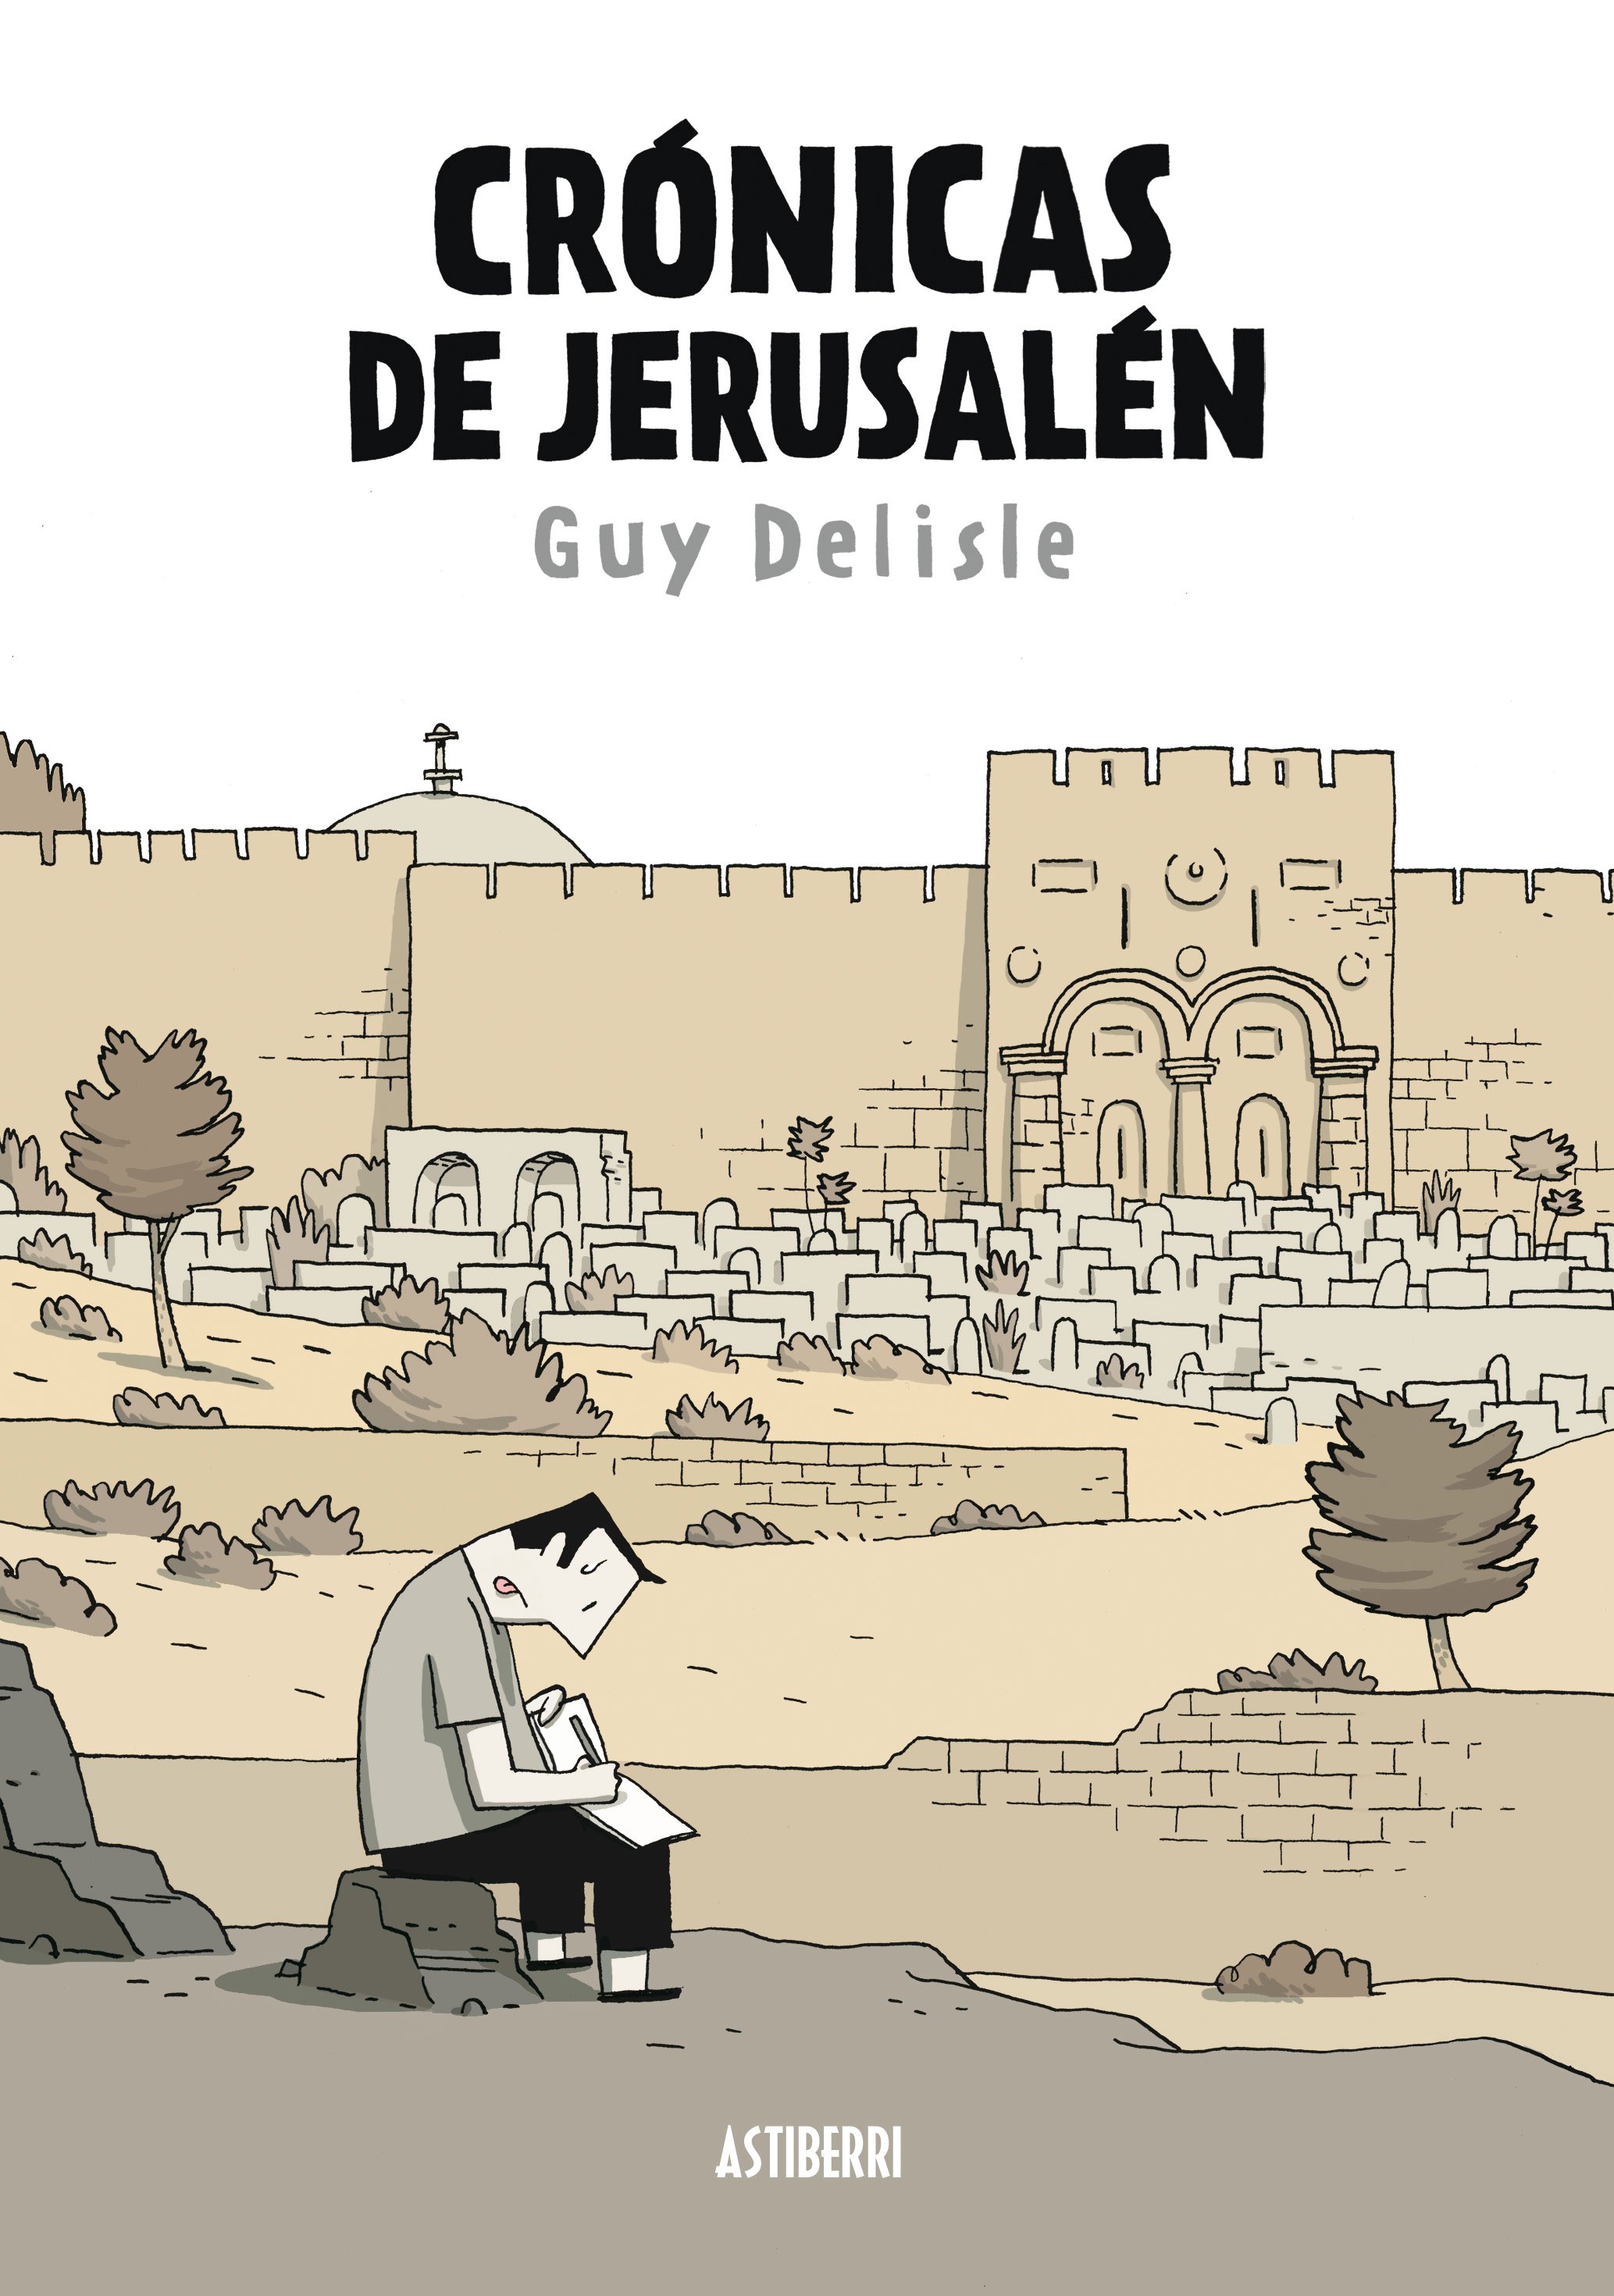 Guy Delisle: Crónicas de Jerusalén (Hardcover, Gaztelania language, 2011, Astiberri)